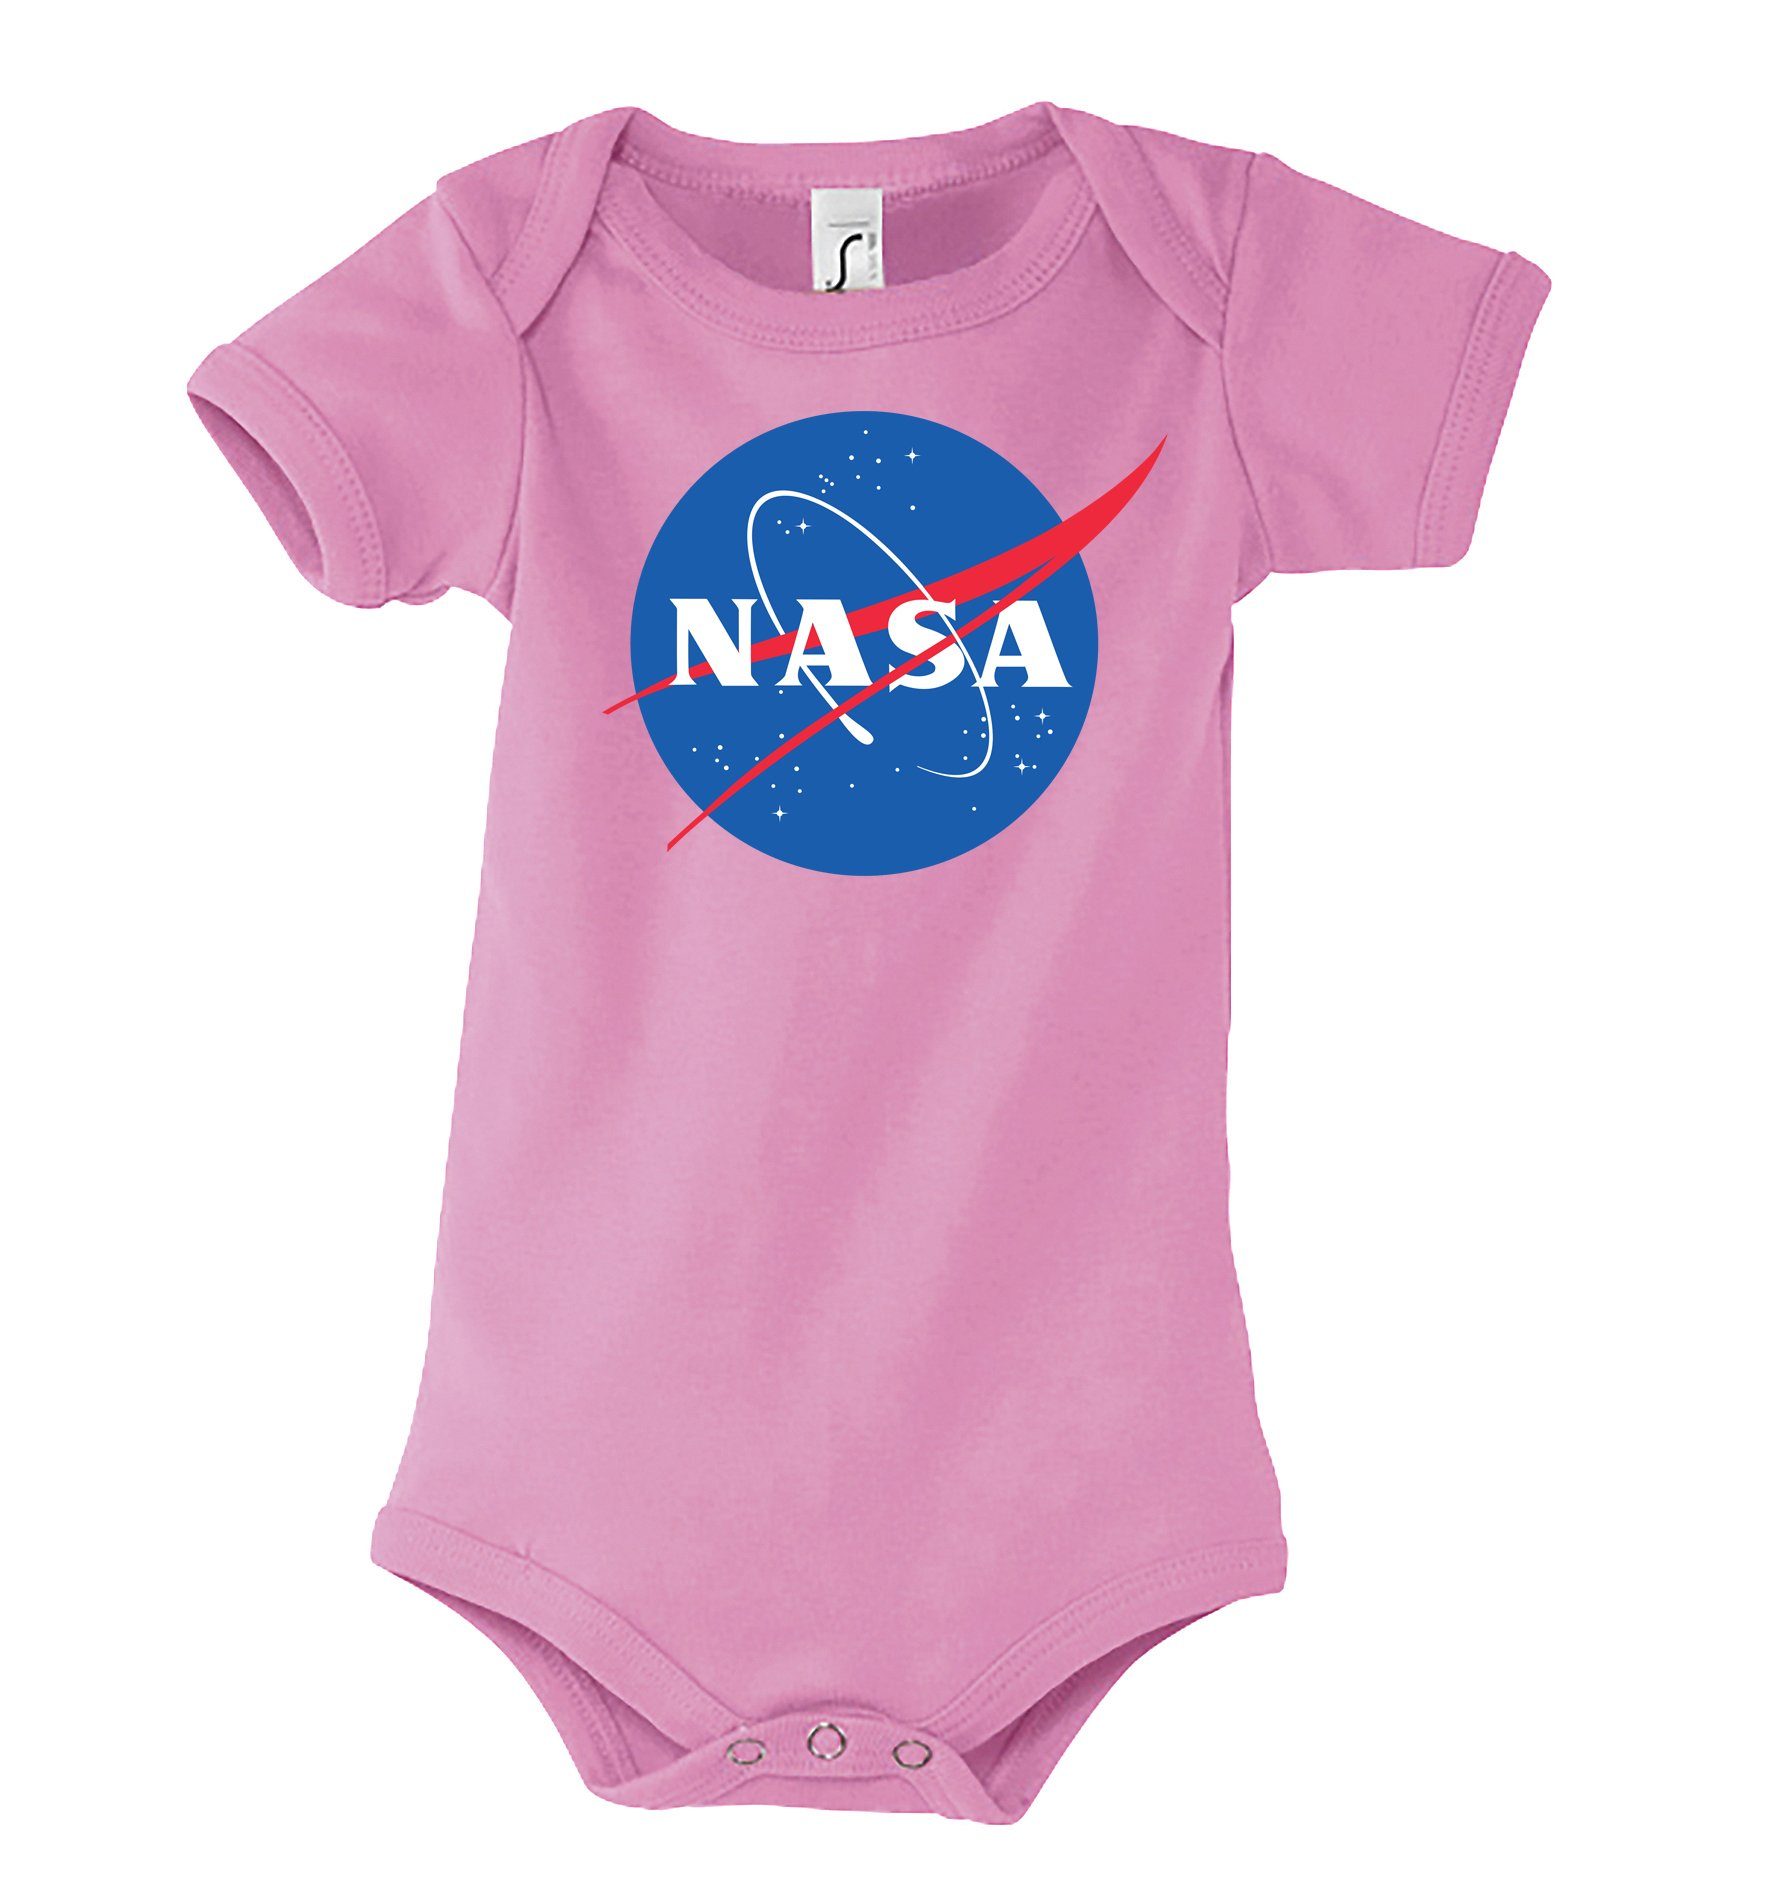 Strampler Baby Youth Kurzarmbody mit niedlichem Rosa Designz Body Frontprint NASA